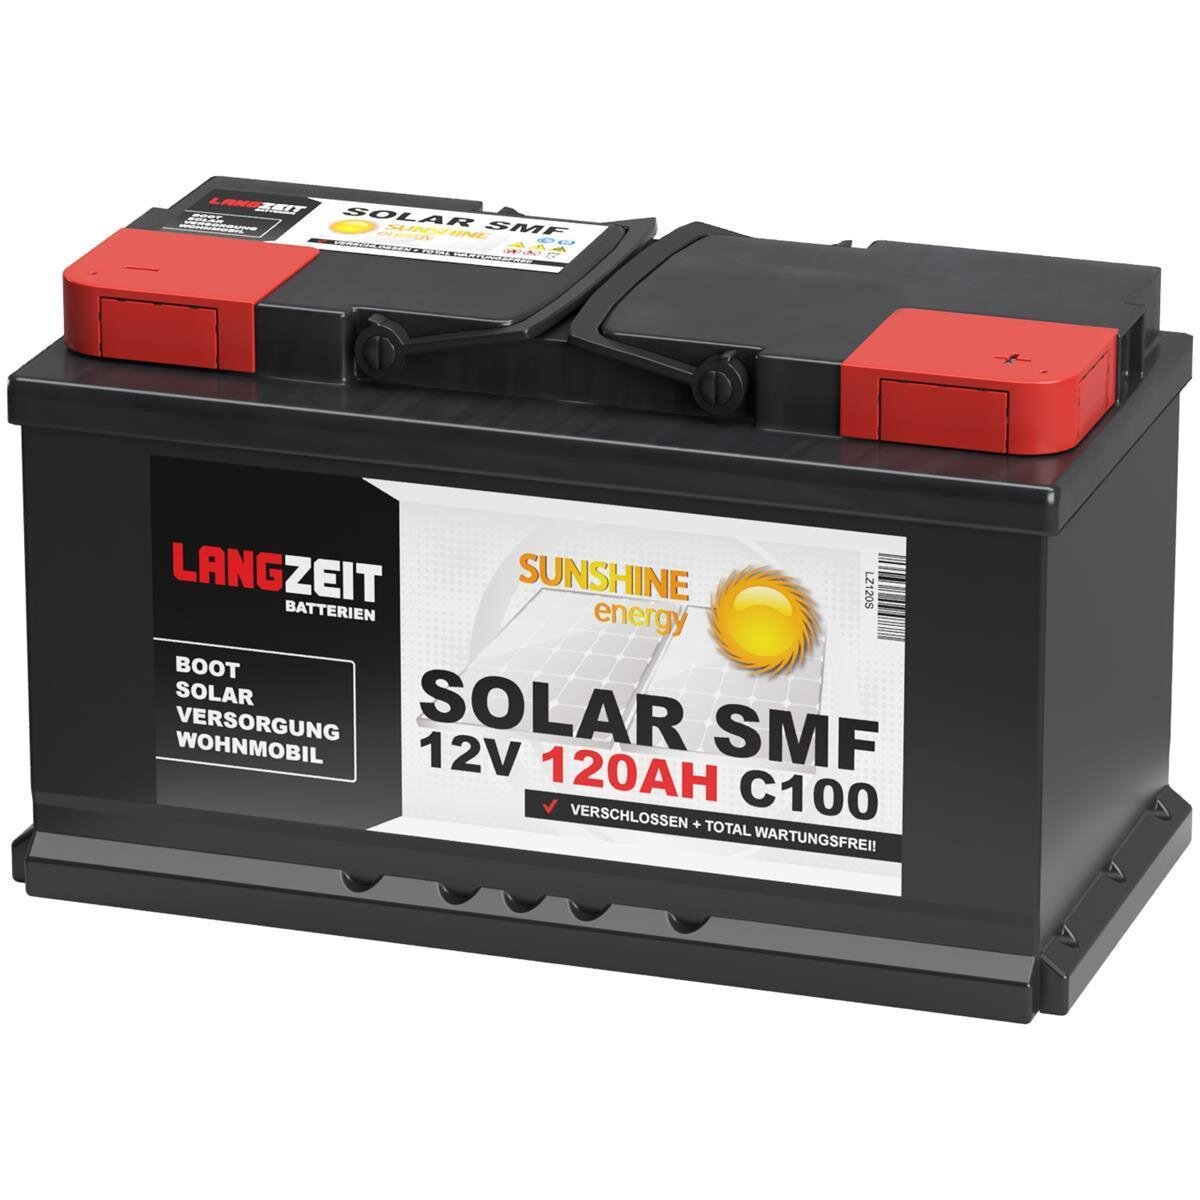 EXAKT Solar DCS Solarbatterie 280Ah 12V, 269,95 €